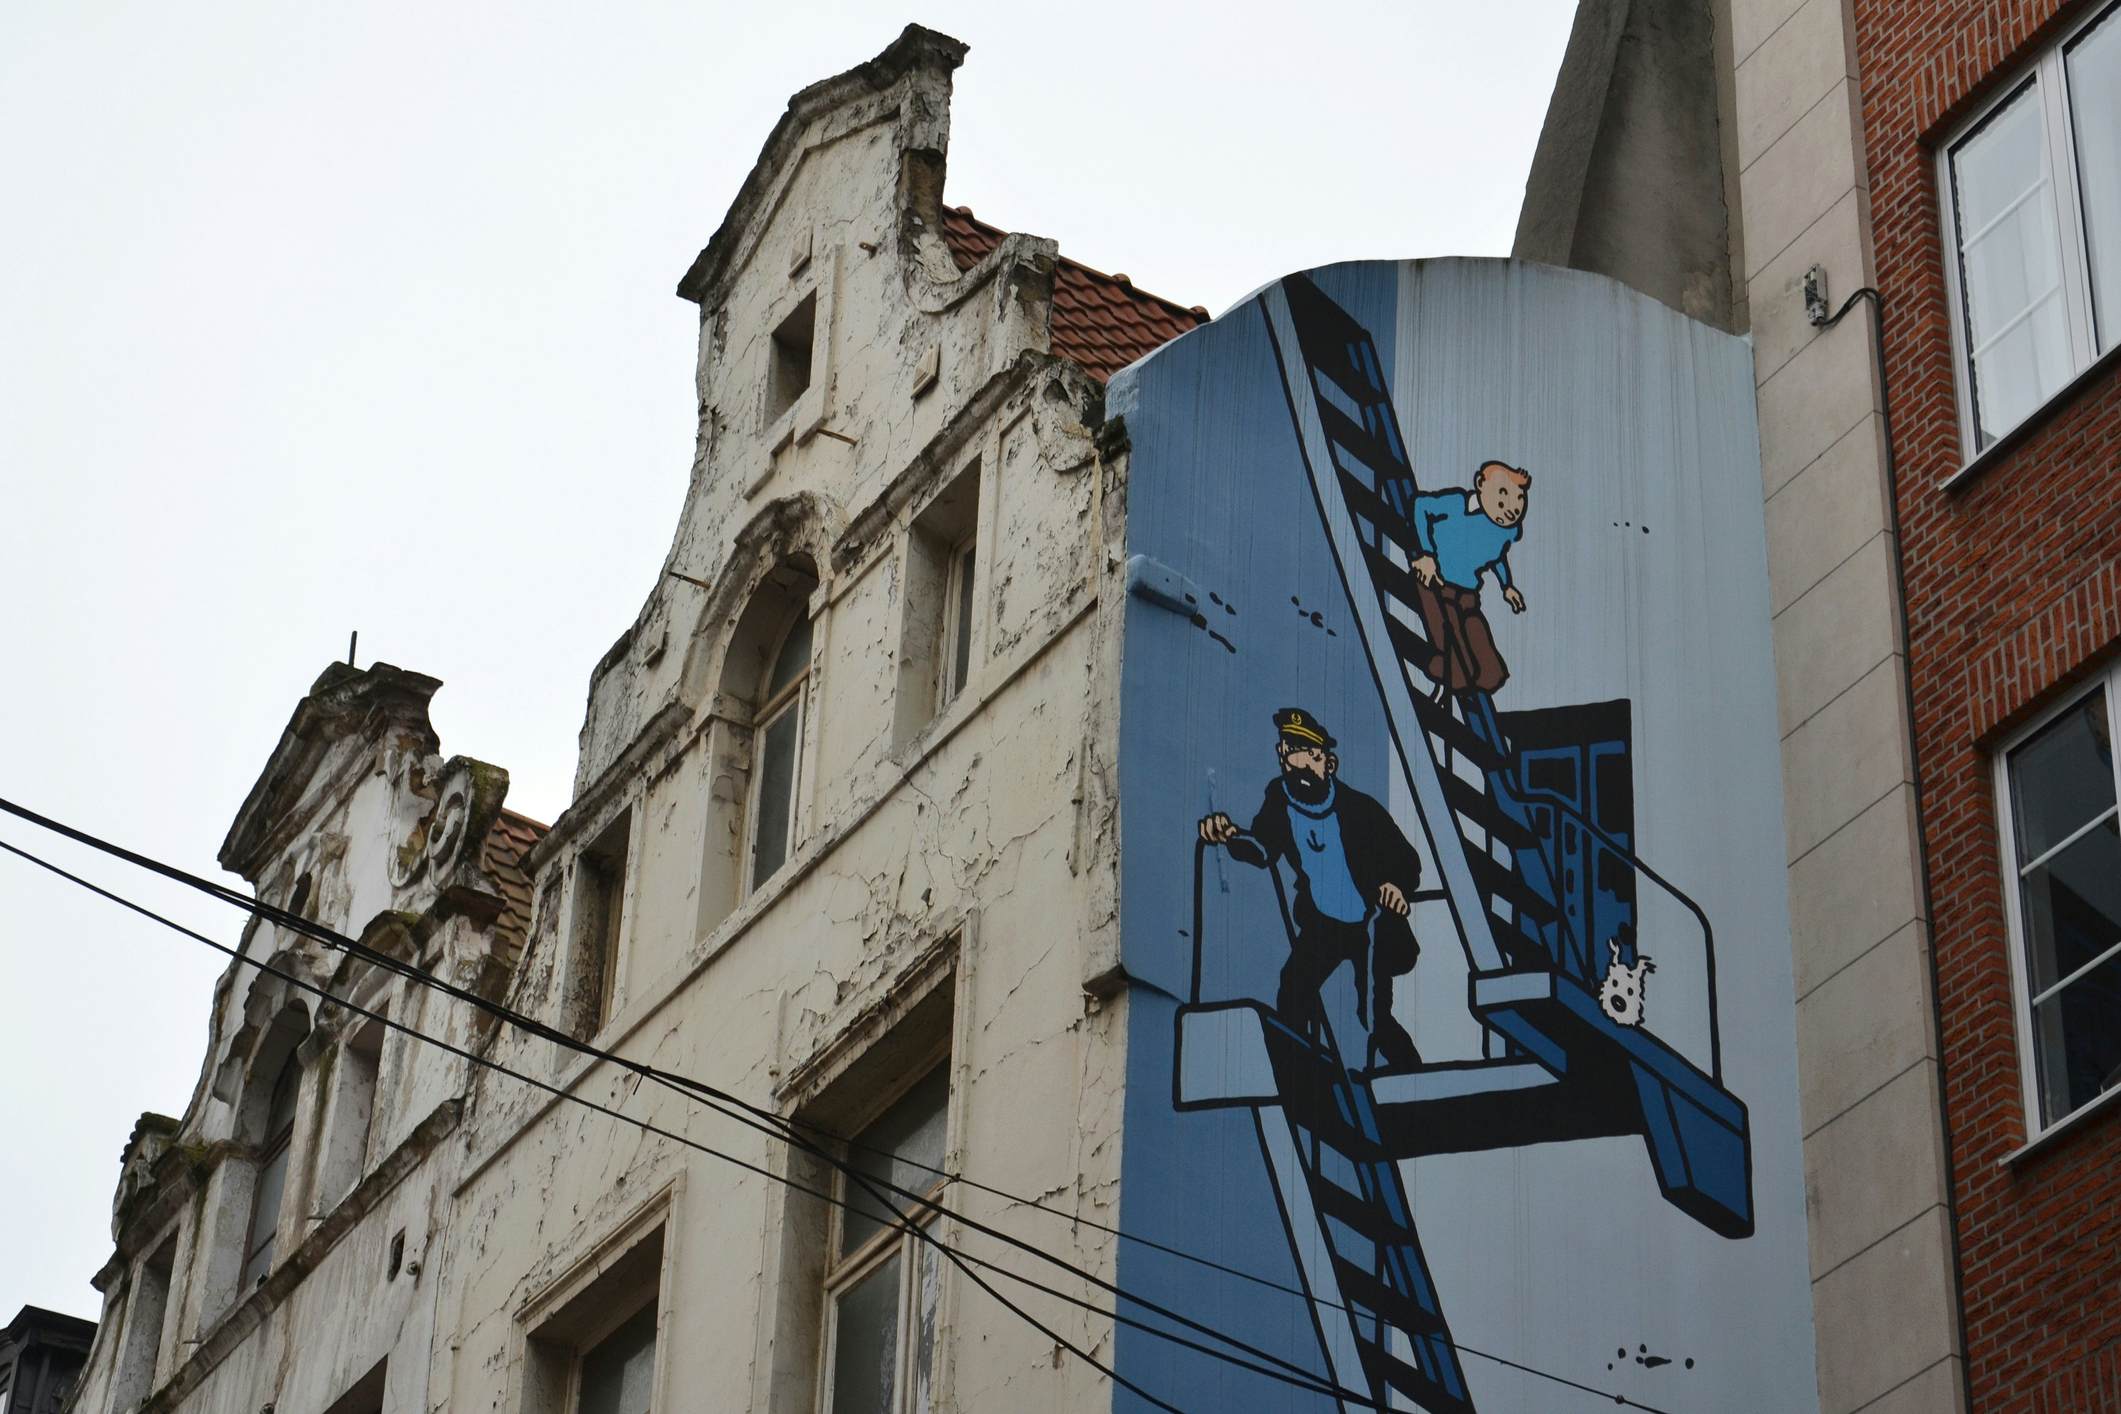 Tintin Mural image